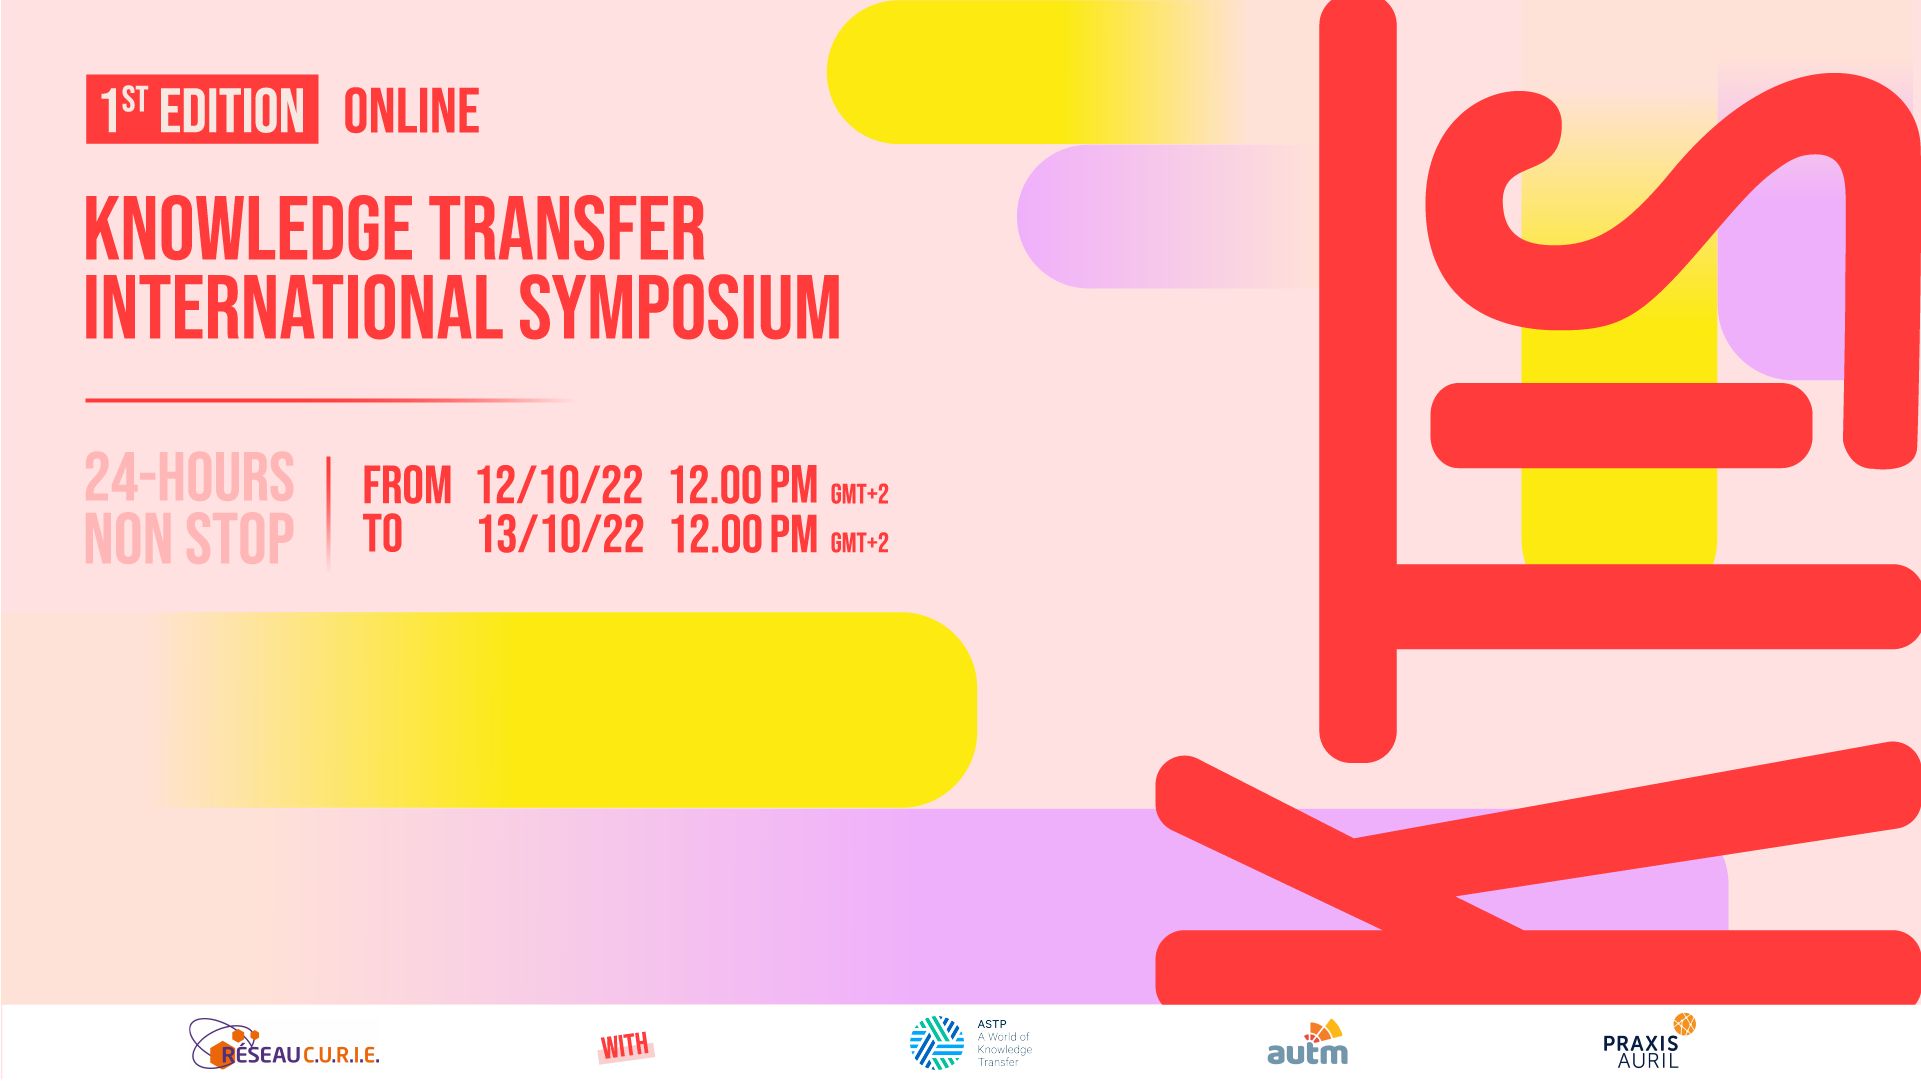 Knowledge Transfer International Symposium, Oct. 12-13 2022